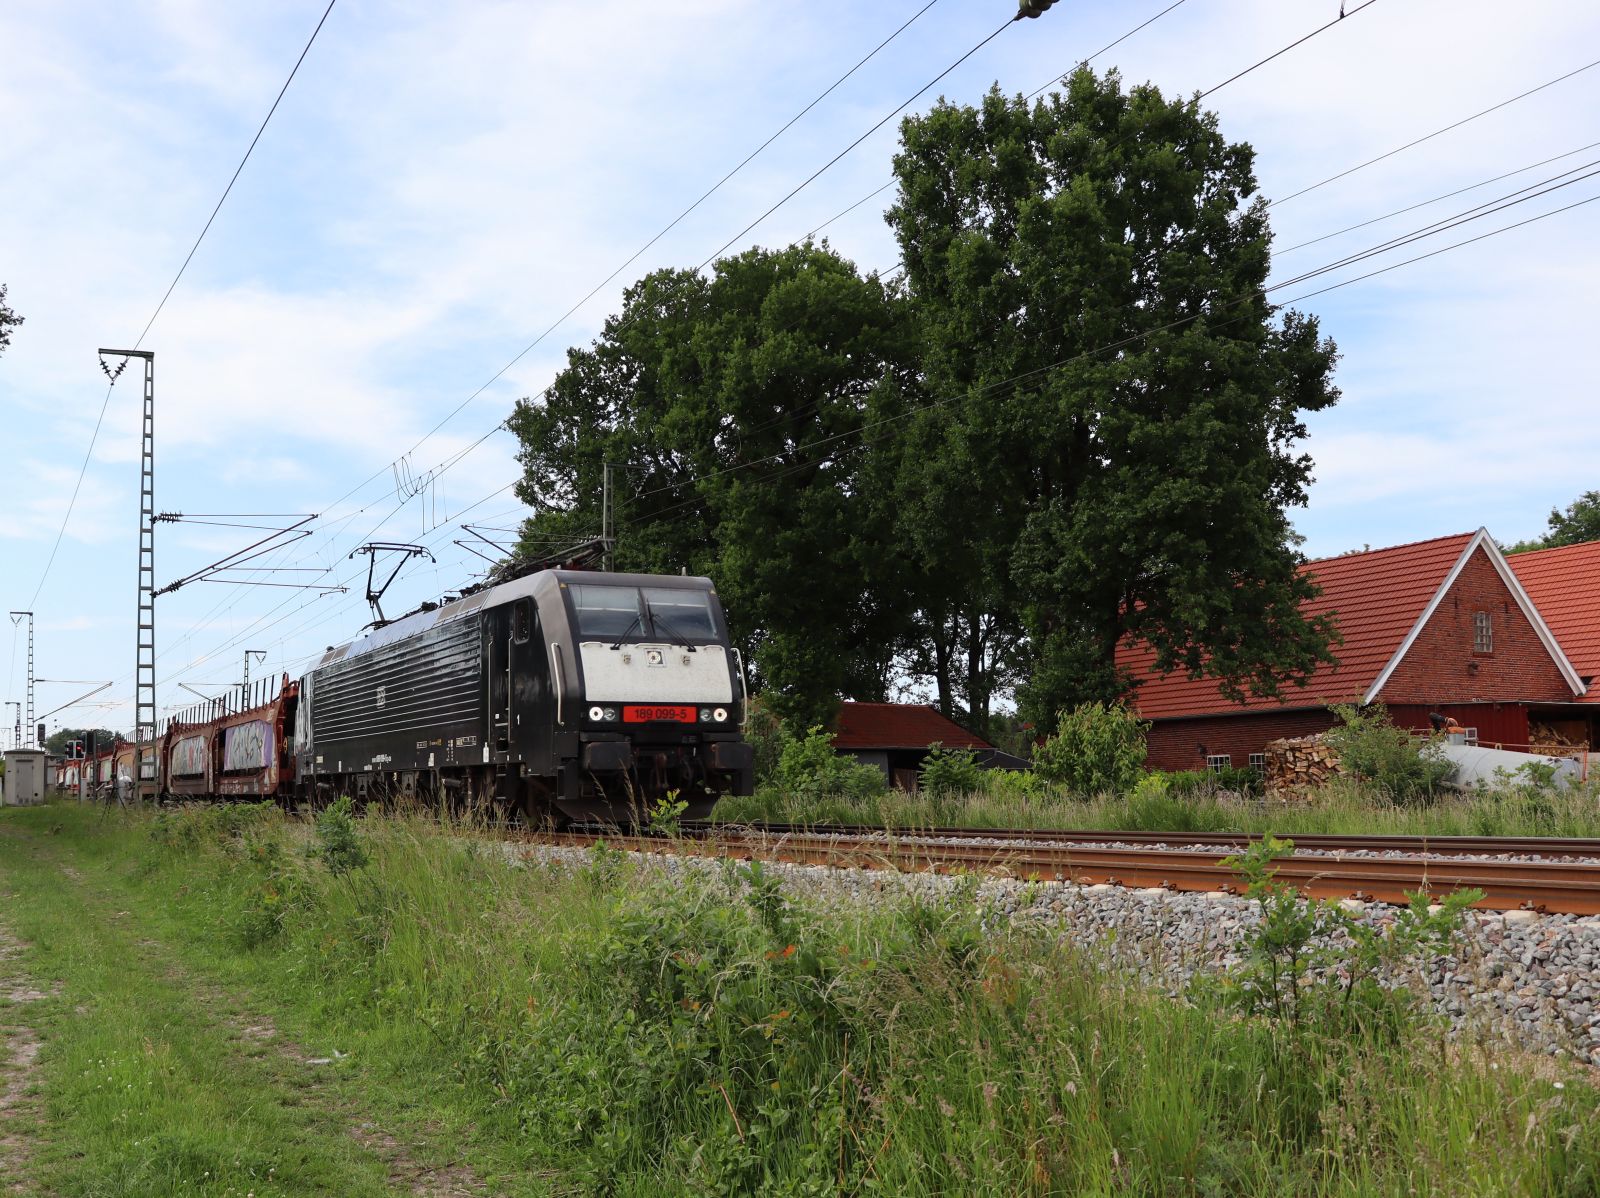 DB Cargo Lokomotive 189 099-5 (91 80 6189 099-5 D-DB) Devesstraße, Salzbergen 03-06-2022.

DB Cargo locomotief 189 099-5 (91 80 6189 099-5 D-DB) Devesstraße, Salzbergen 03-06-2022.